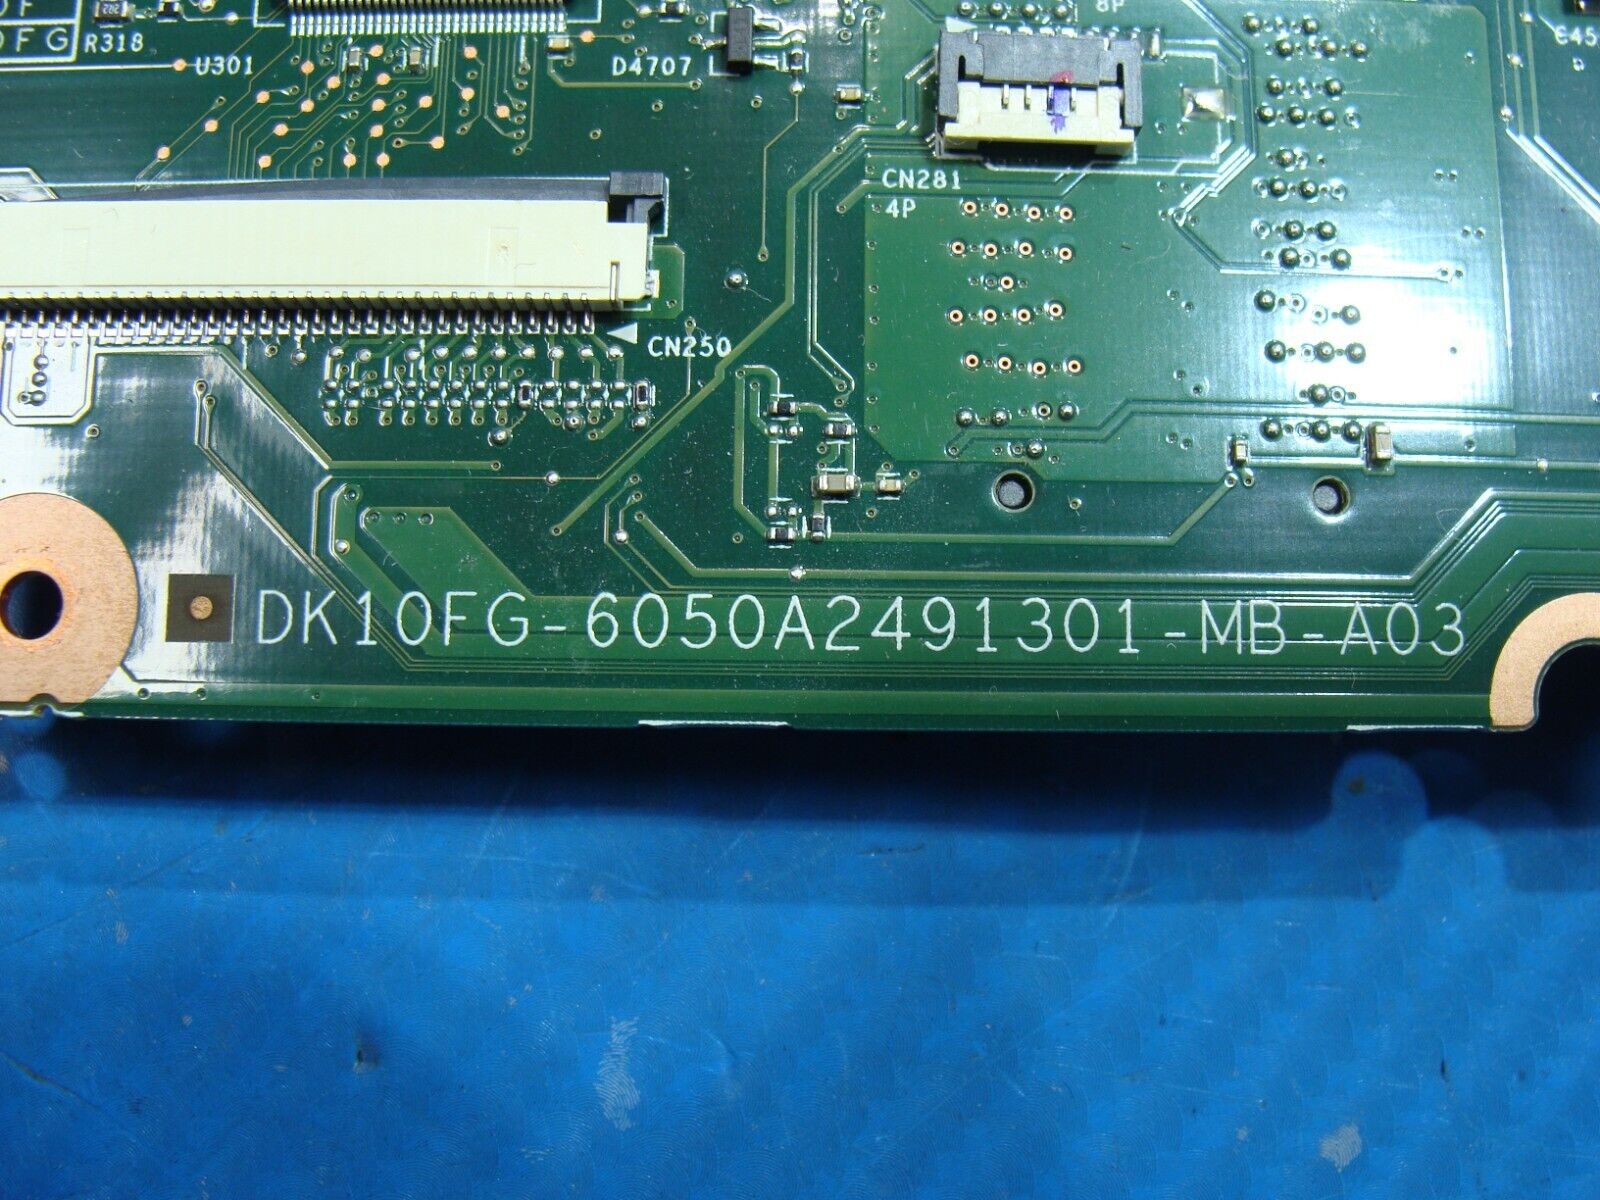 Toshiba Satellite 15.6” L855-S5280P OEM Intel Socket Motherboard V000275290